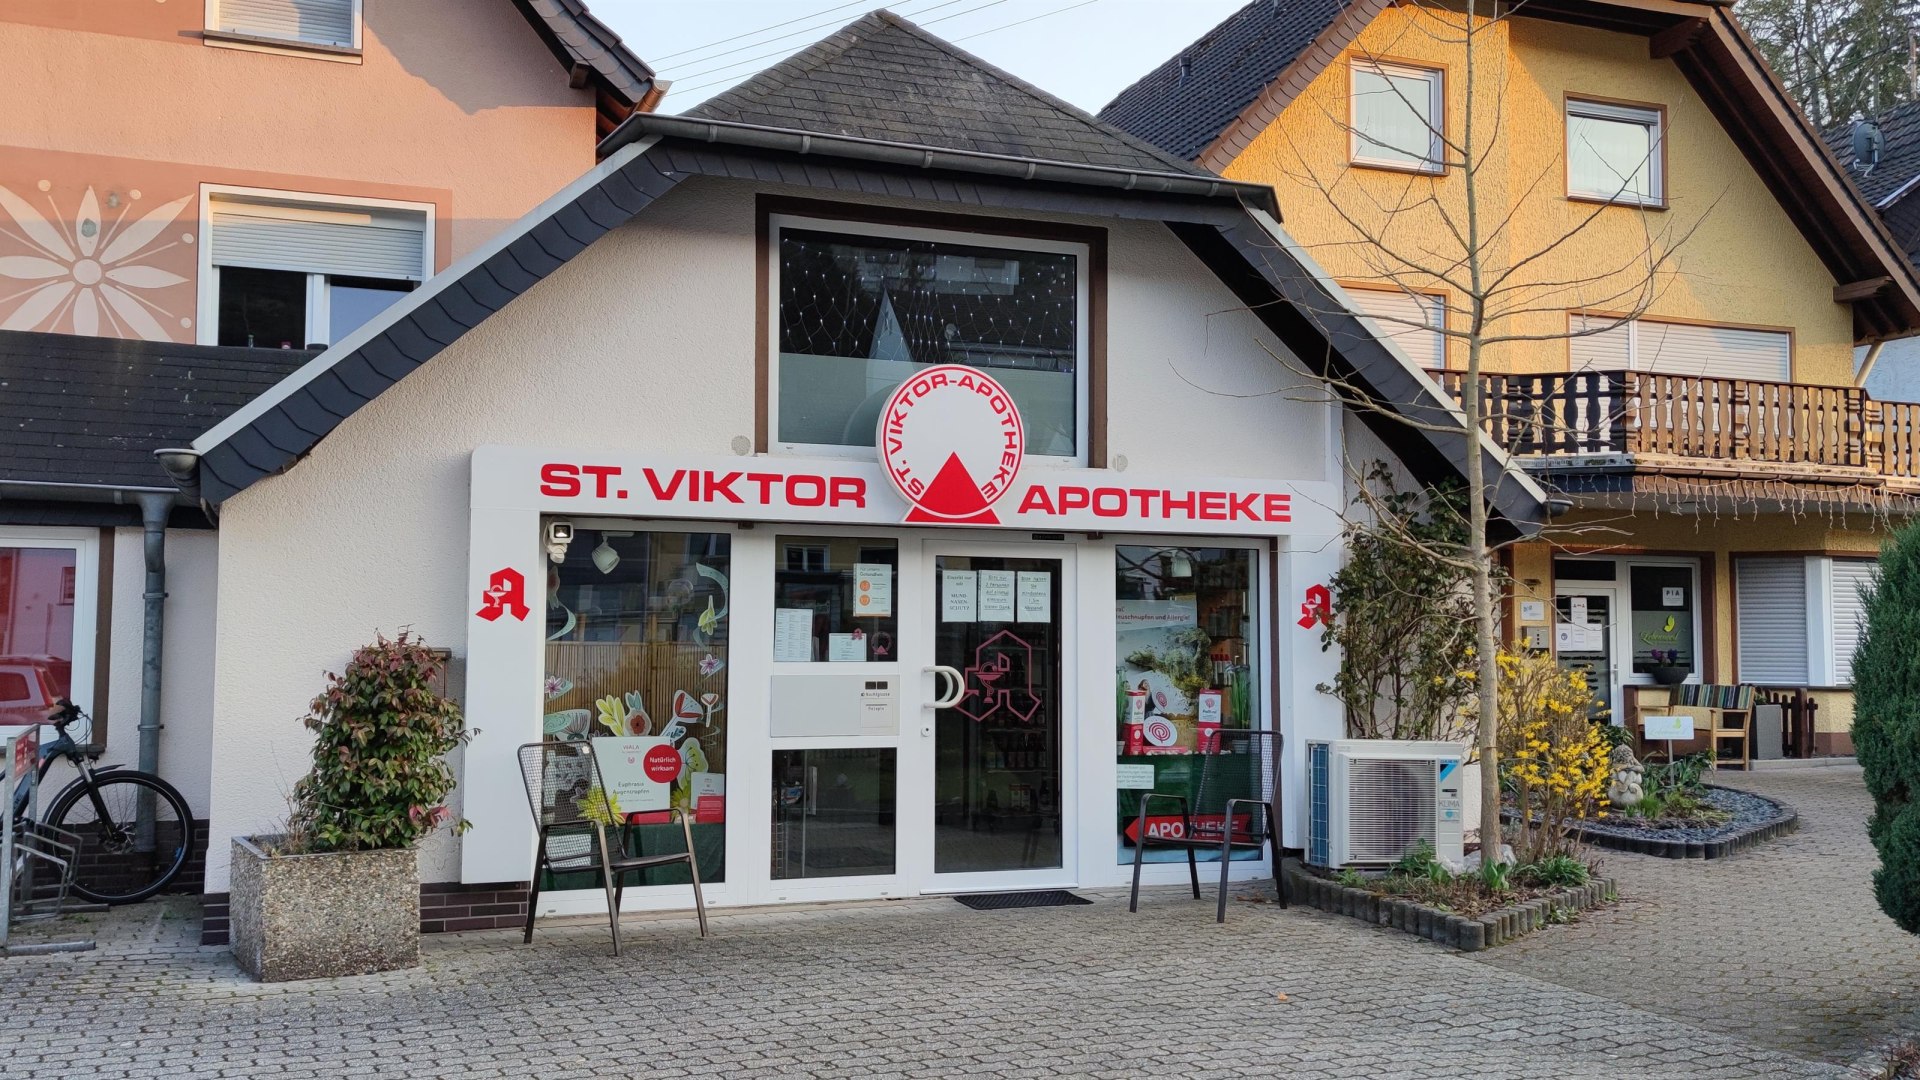 St. Viktor Apotheke | © Tourist-Information Bad Breisig